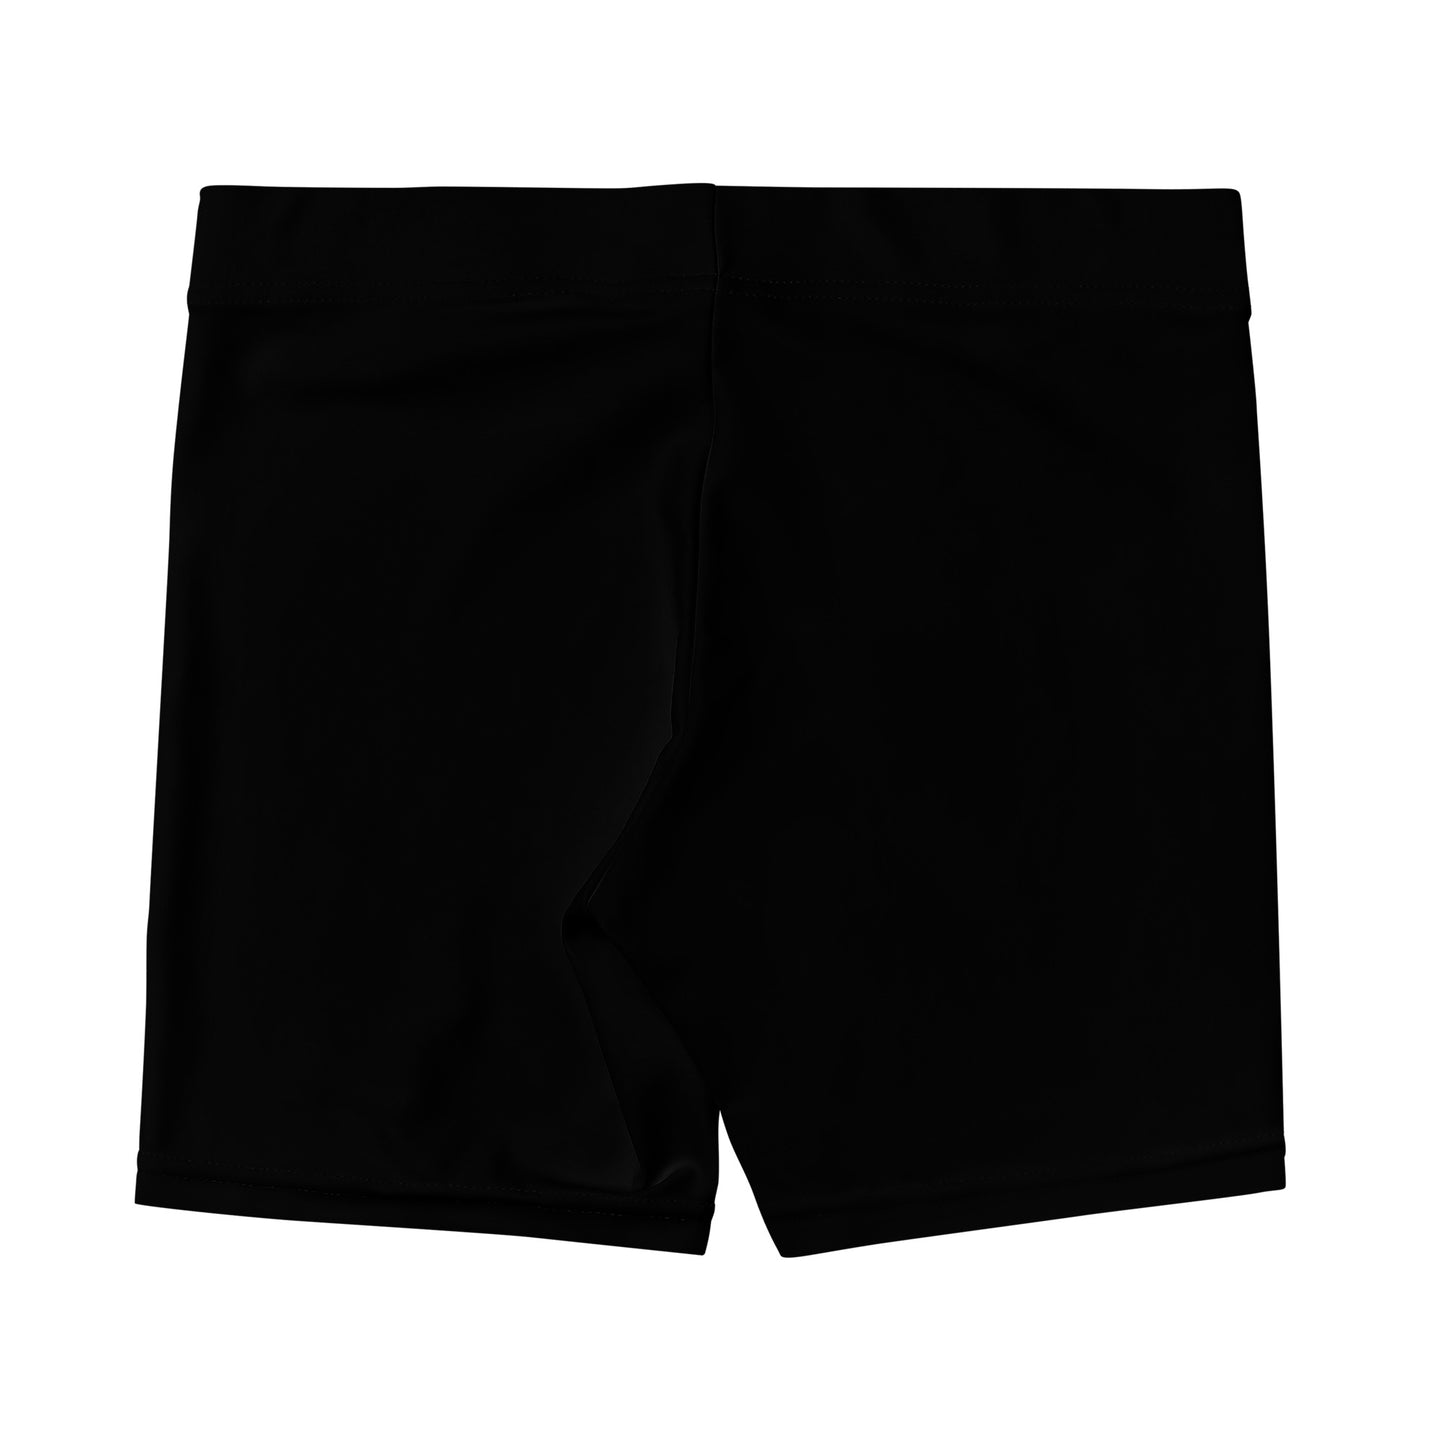 Comfort Black Yoga Shorts with White Weed Leaf